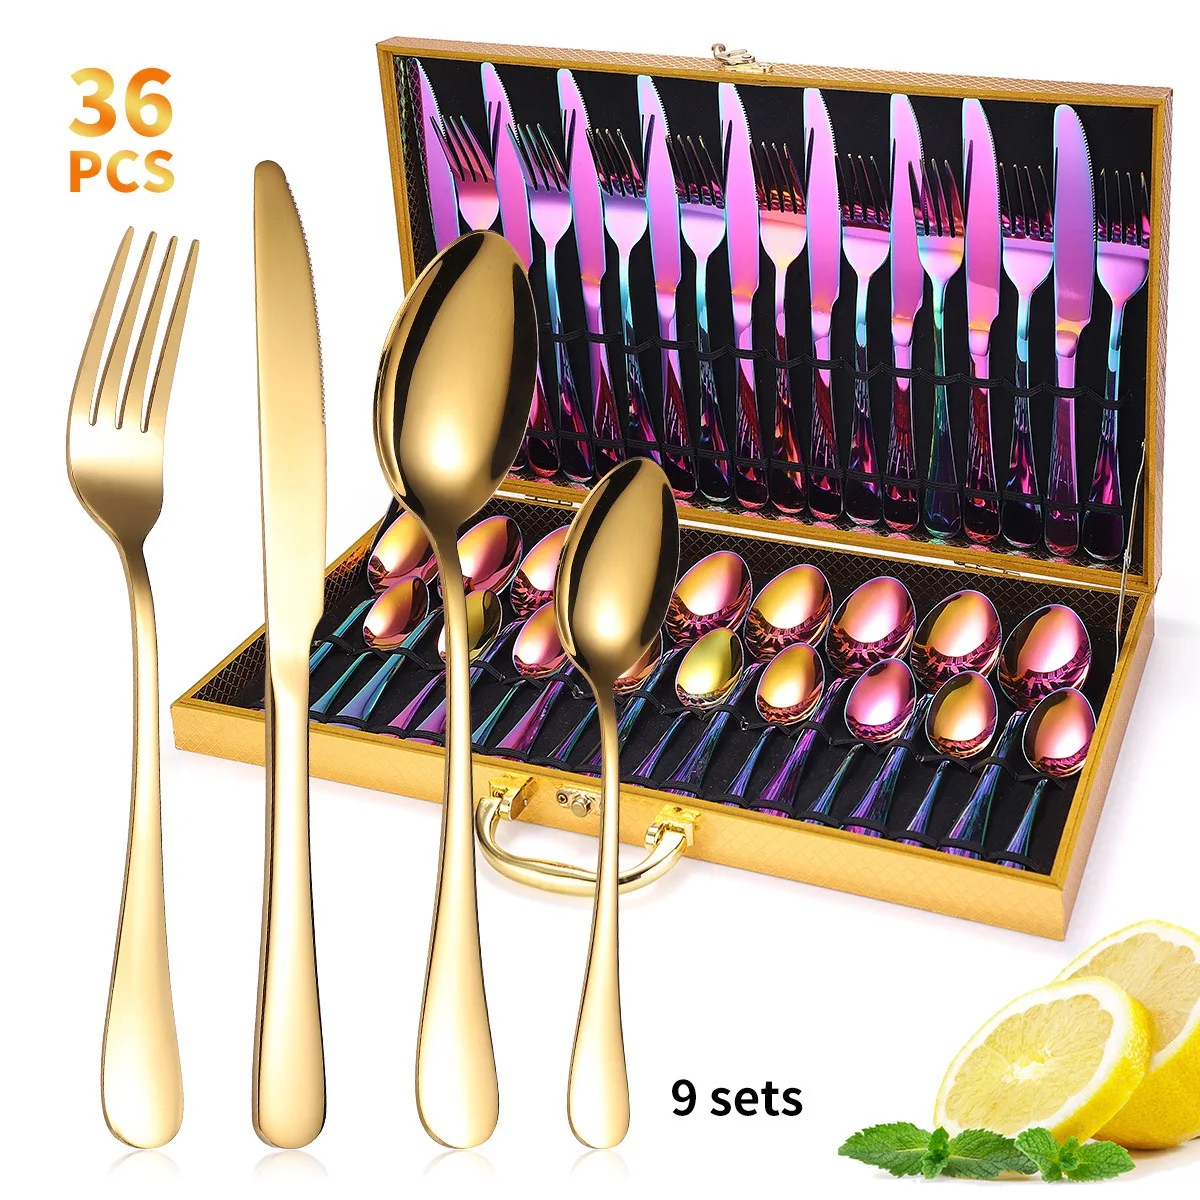 

Food Grade Stainless Steel Golden Cutlery Flatware Set 36PCS Silverware Spoon Fork Knife, Silver/gold/rose gold/multicolored/black